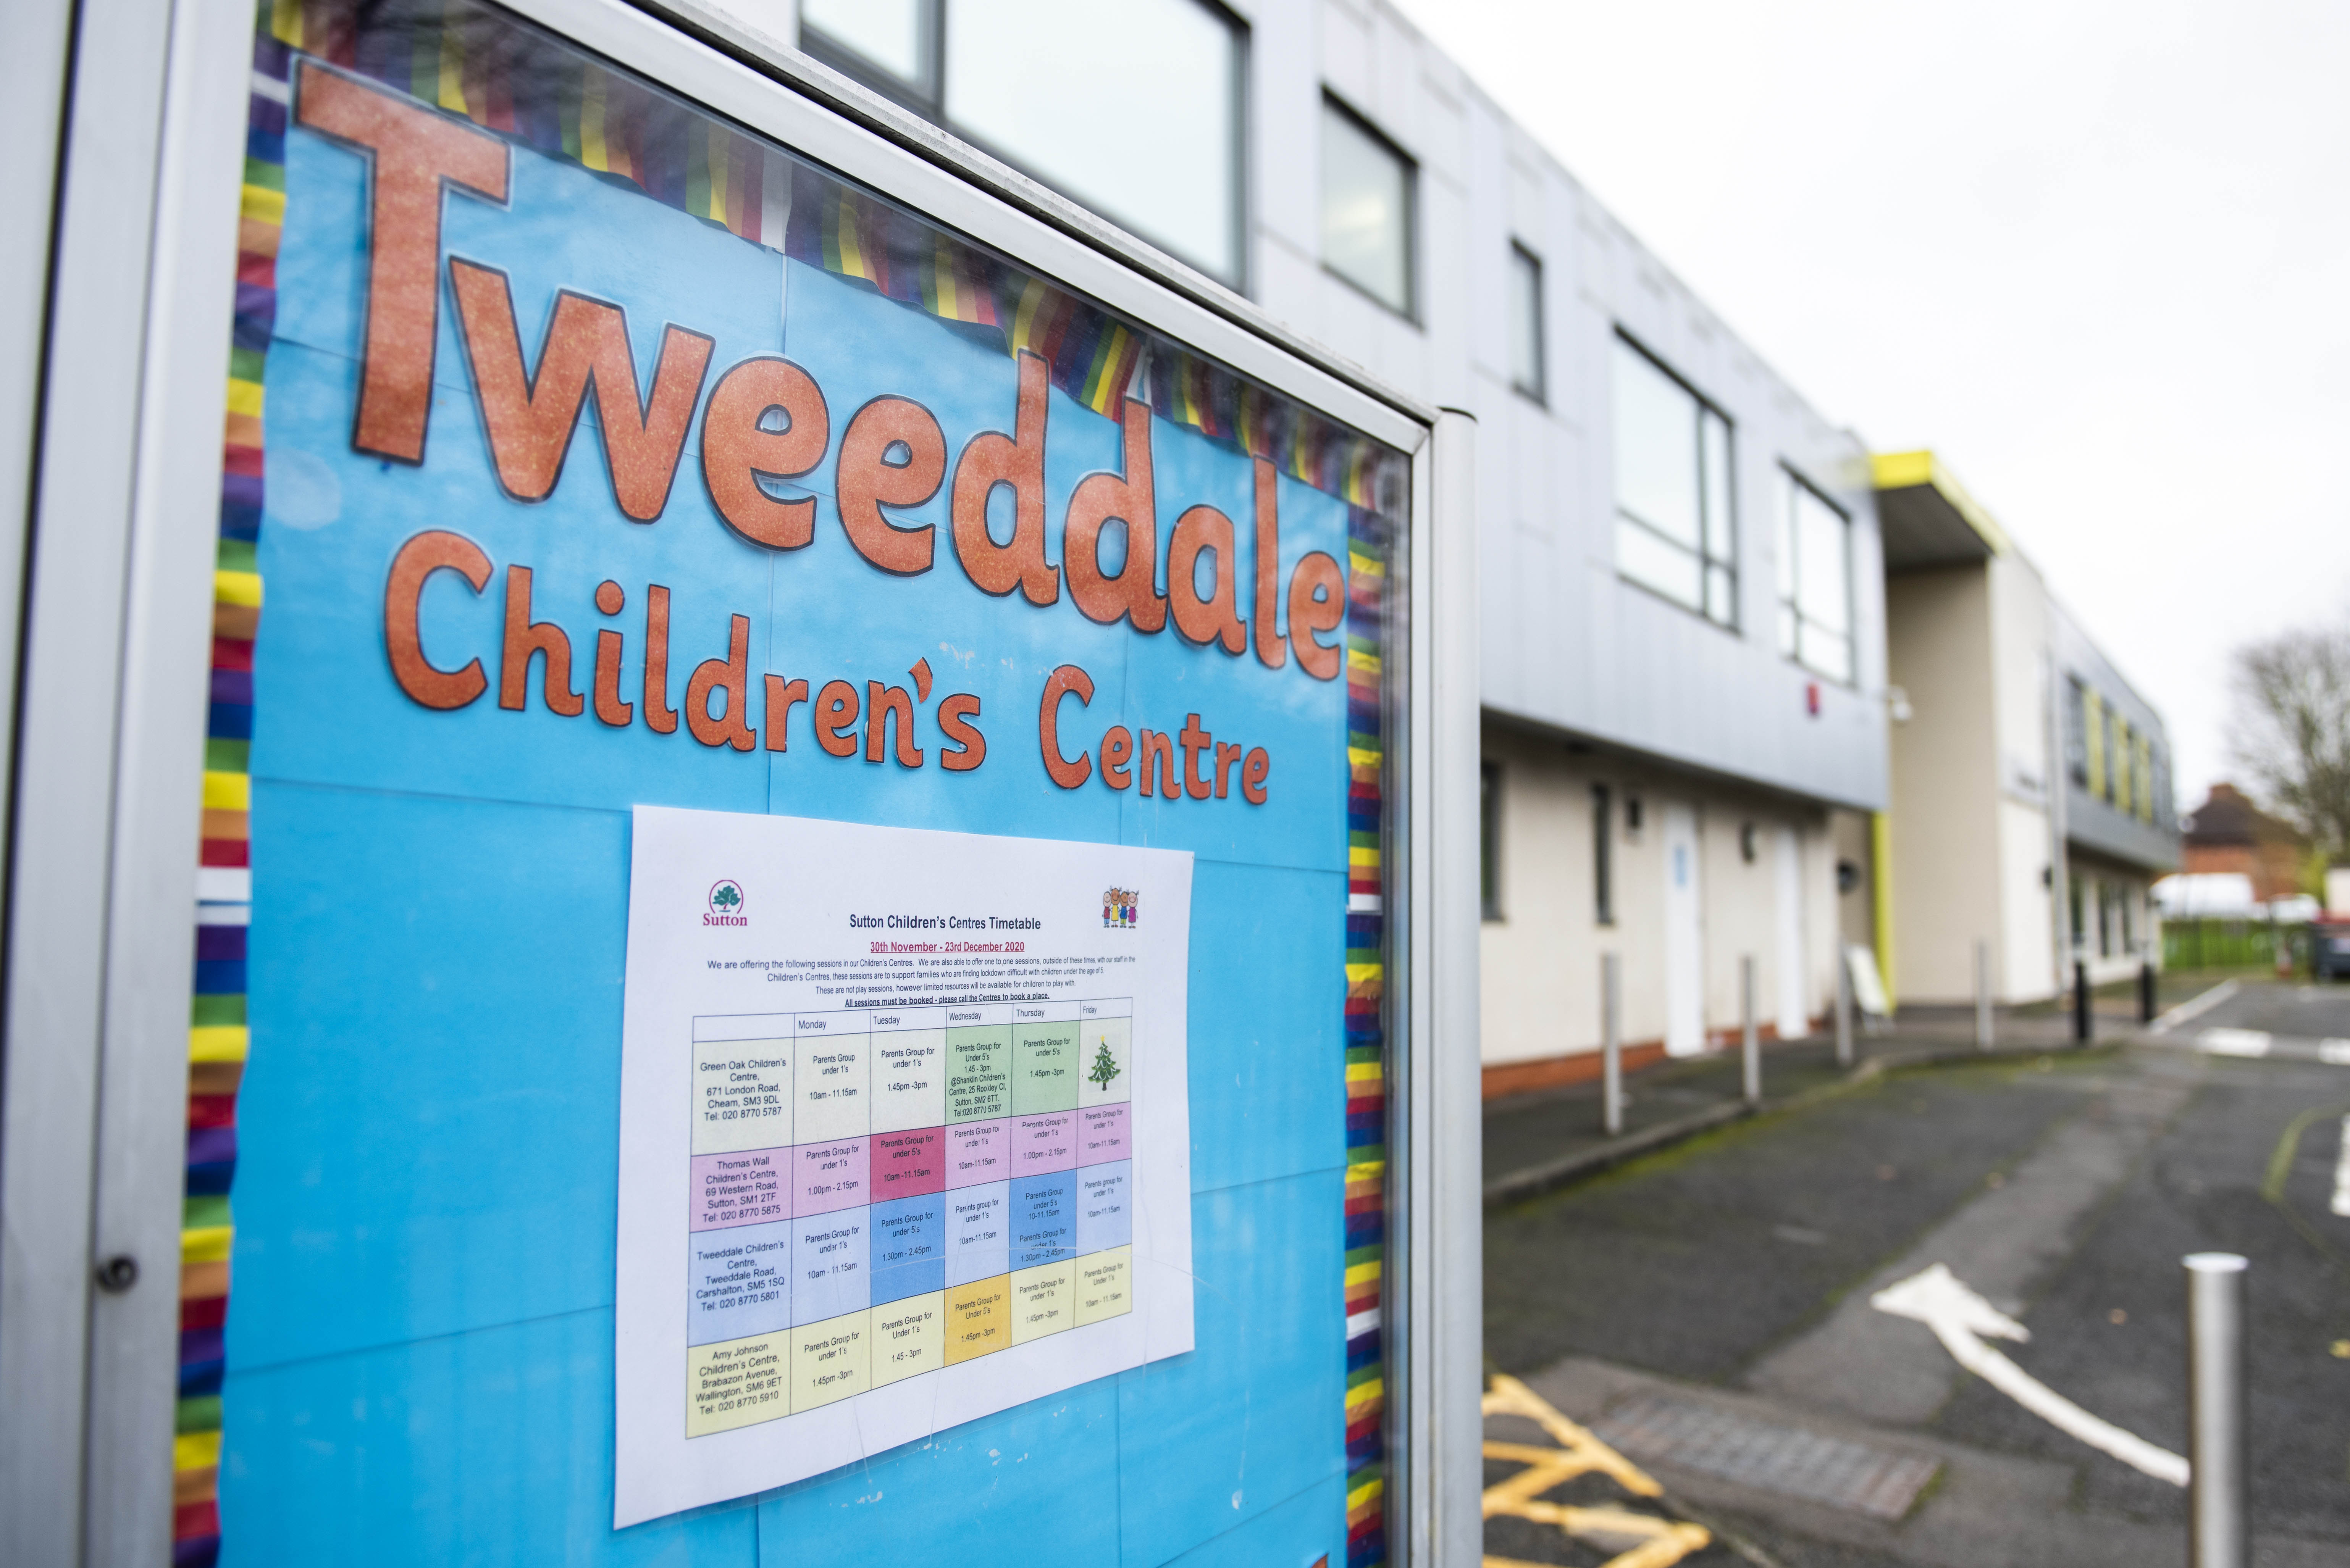 Tweedale children's centre sign